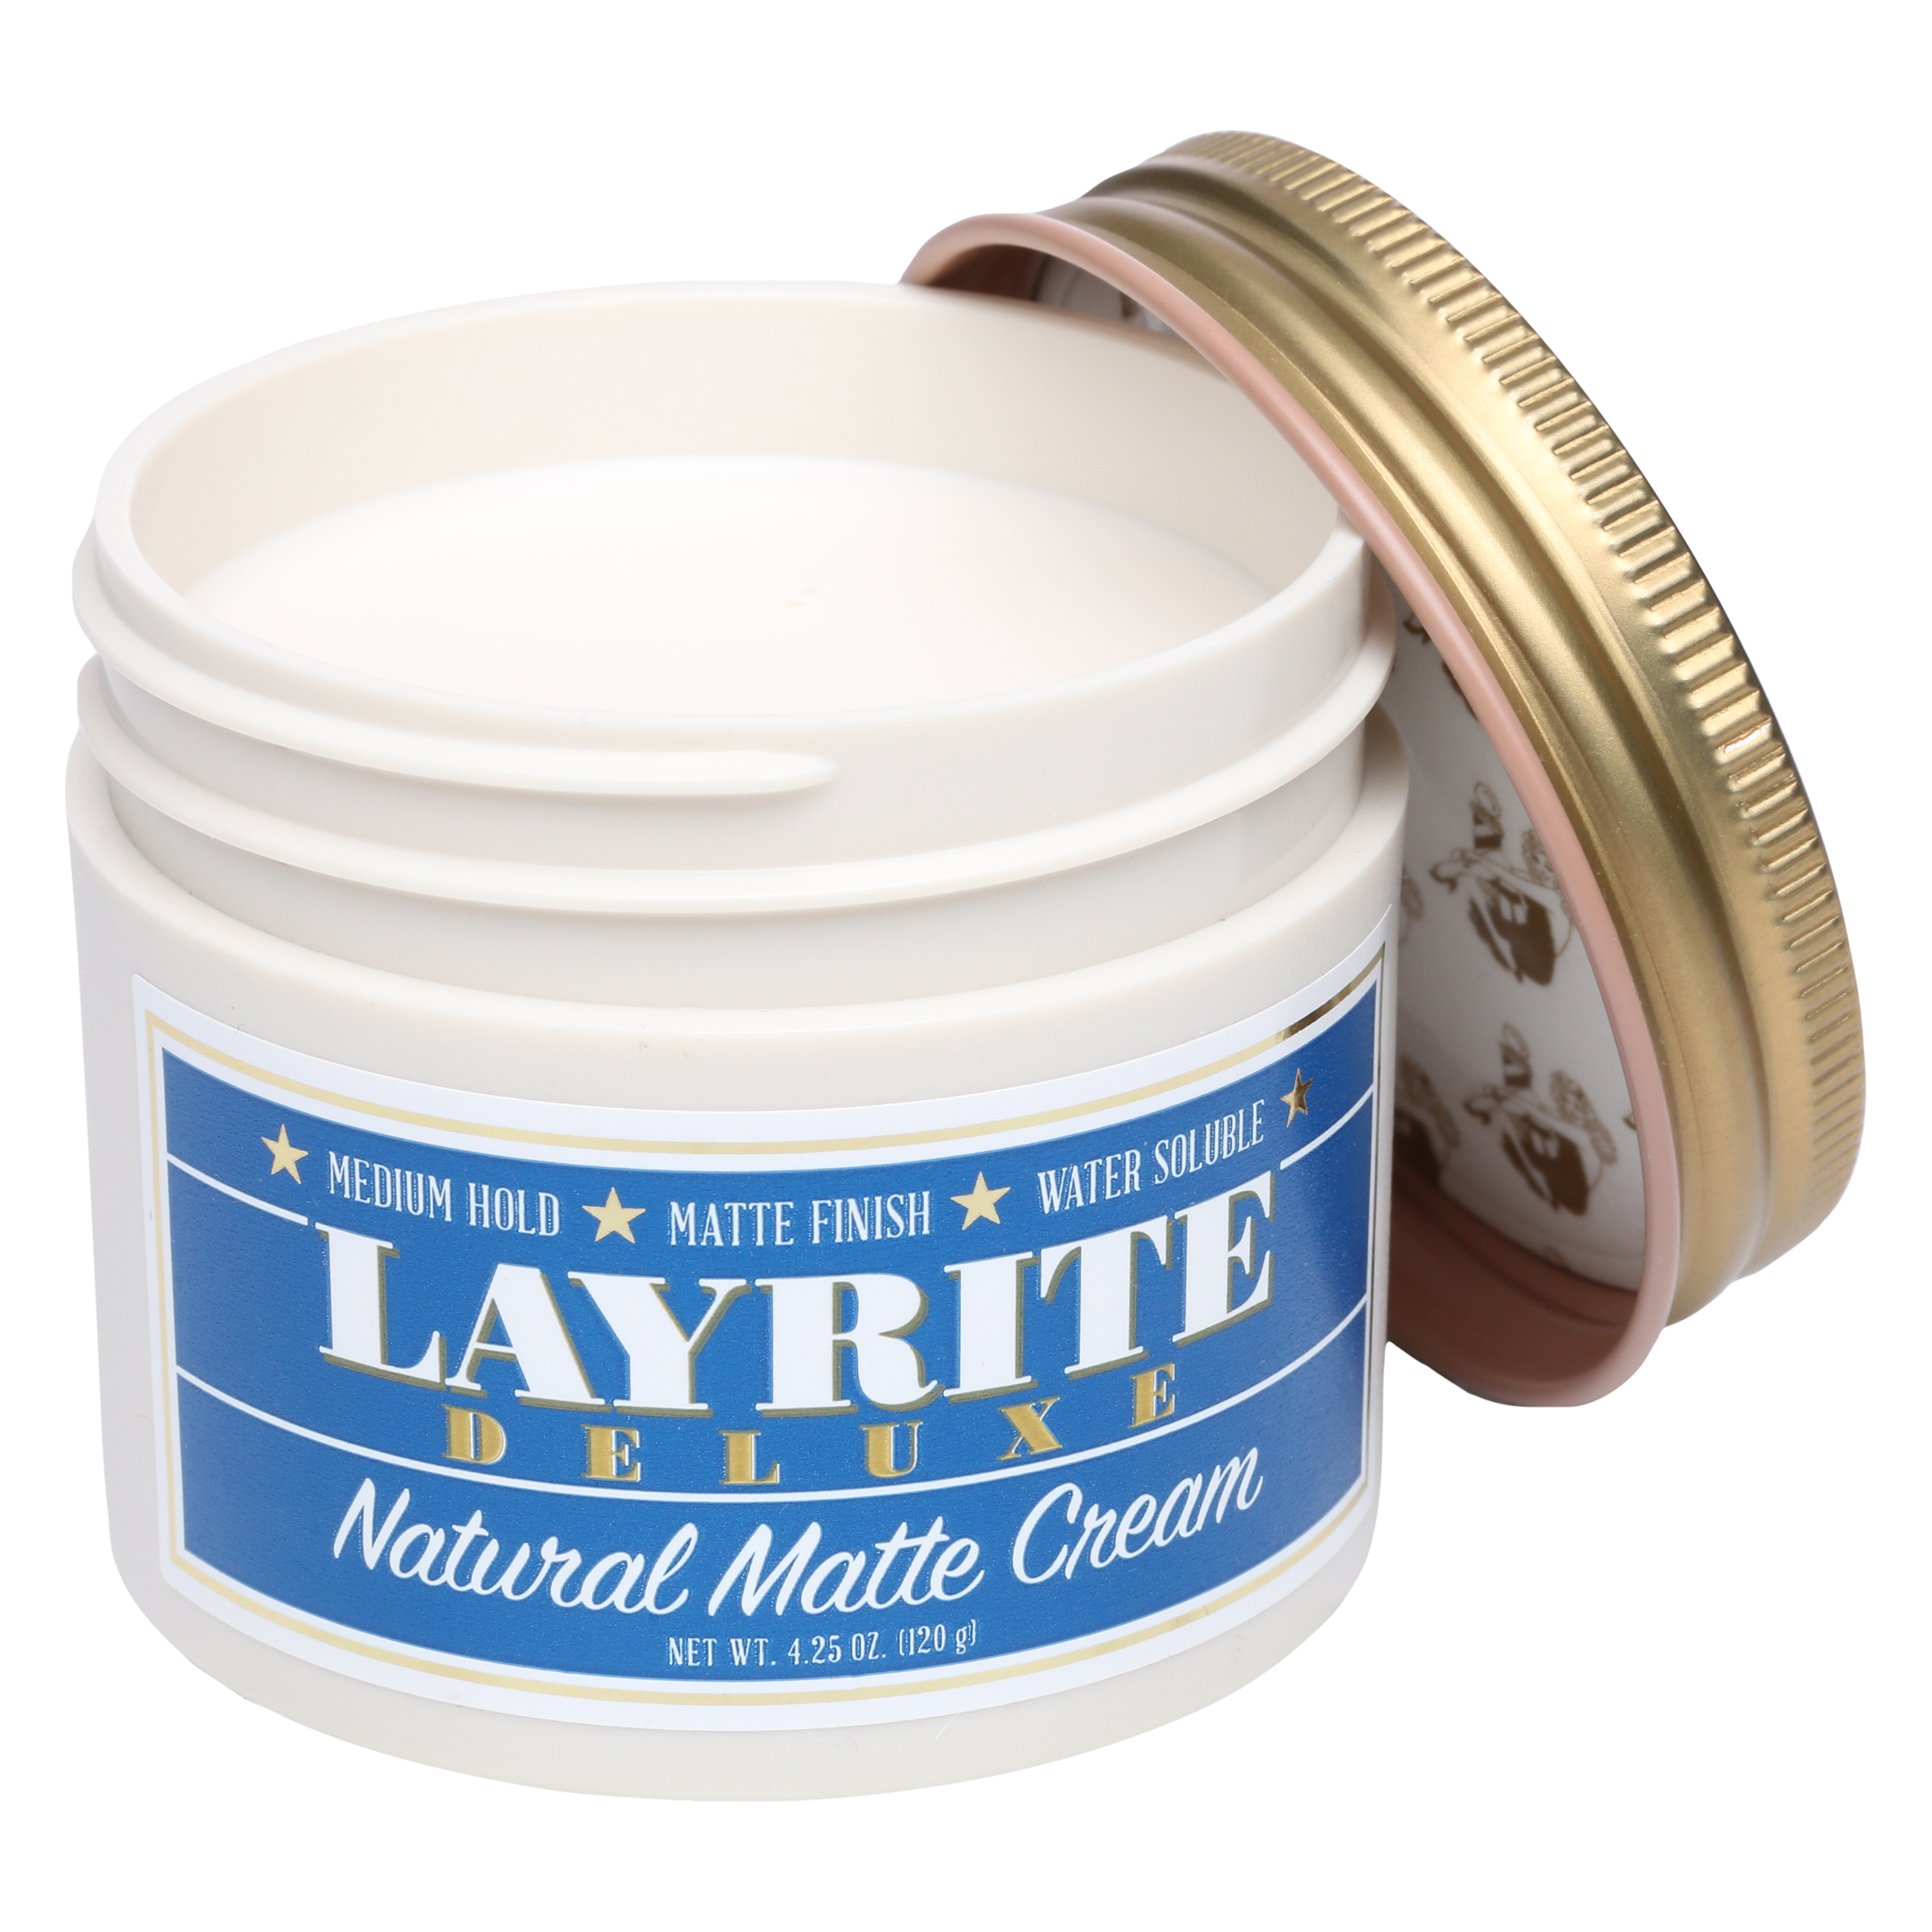 Layrite Natural Matte Cream